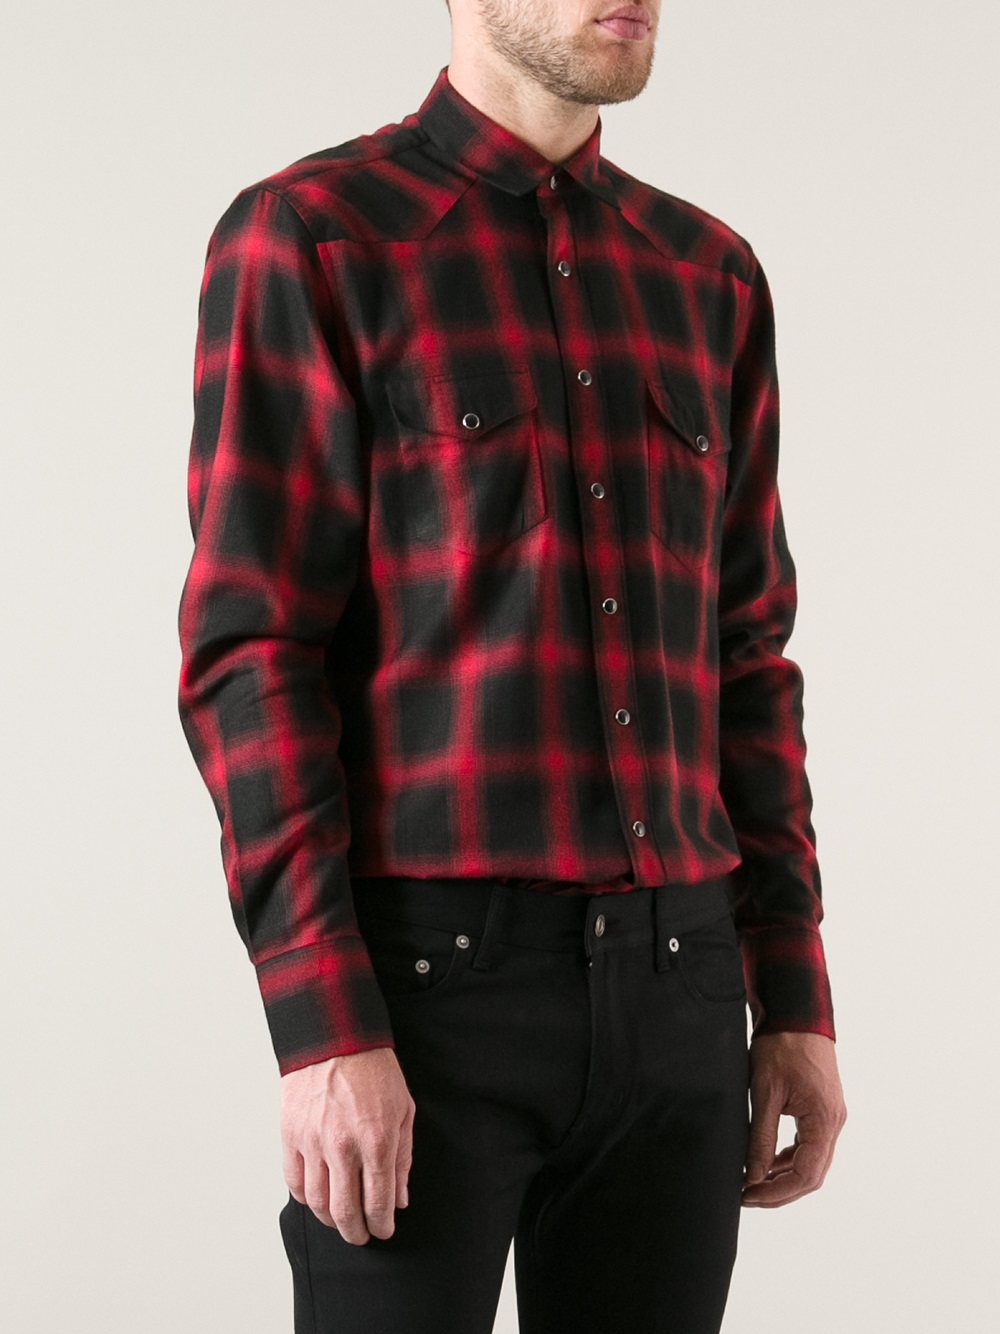 Saint Laurent Distressed Rayon Check Long Sleeve Shirt Red,Black